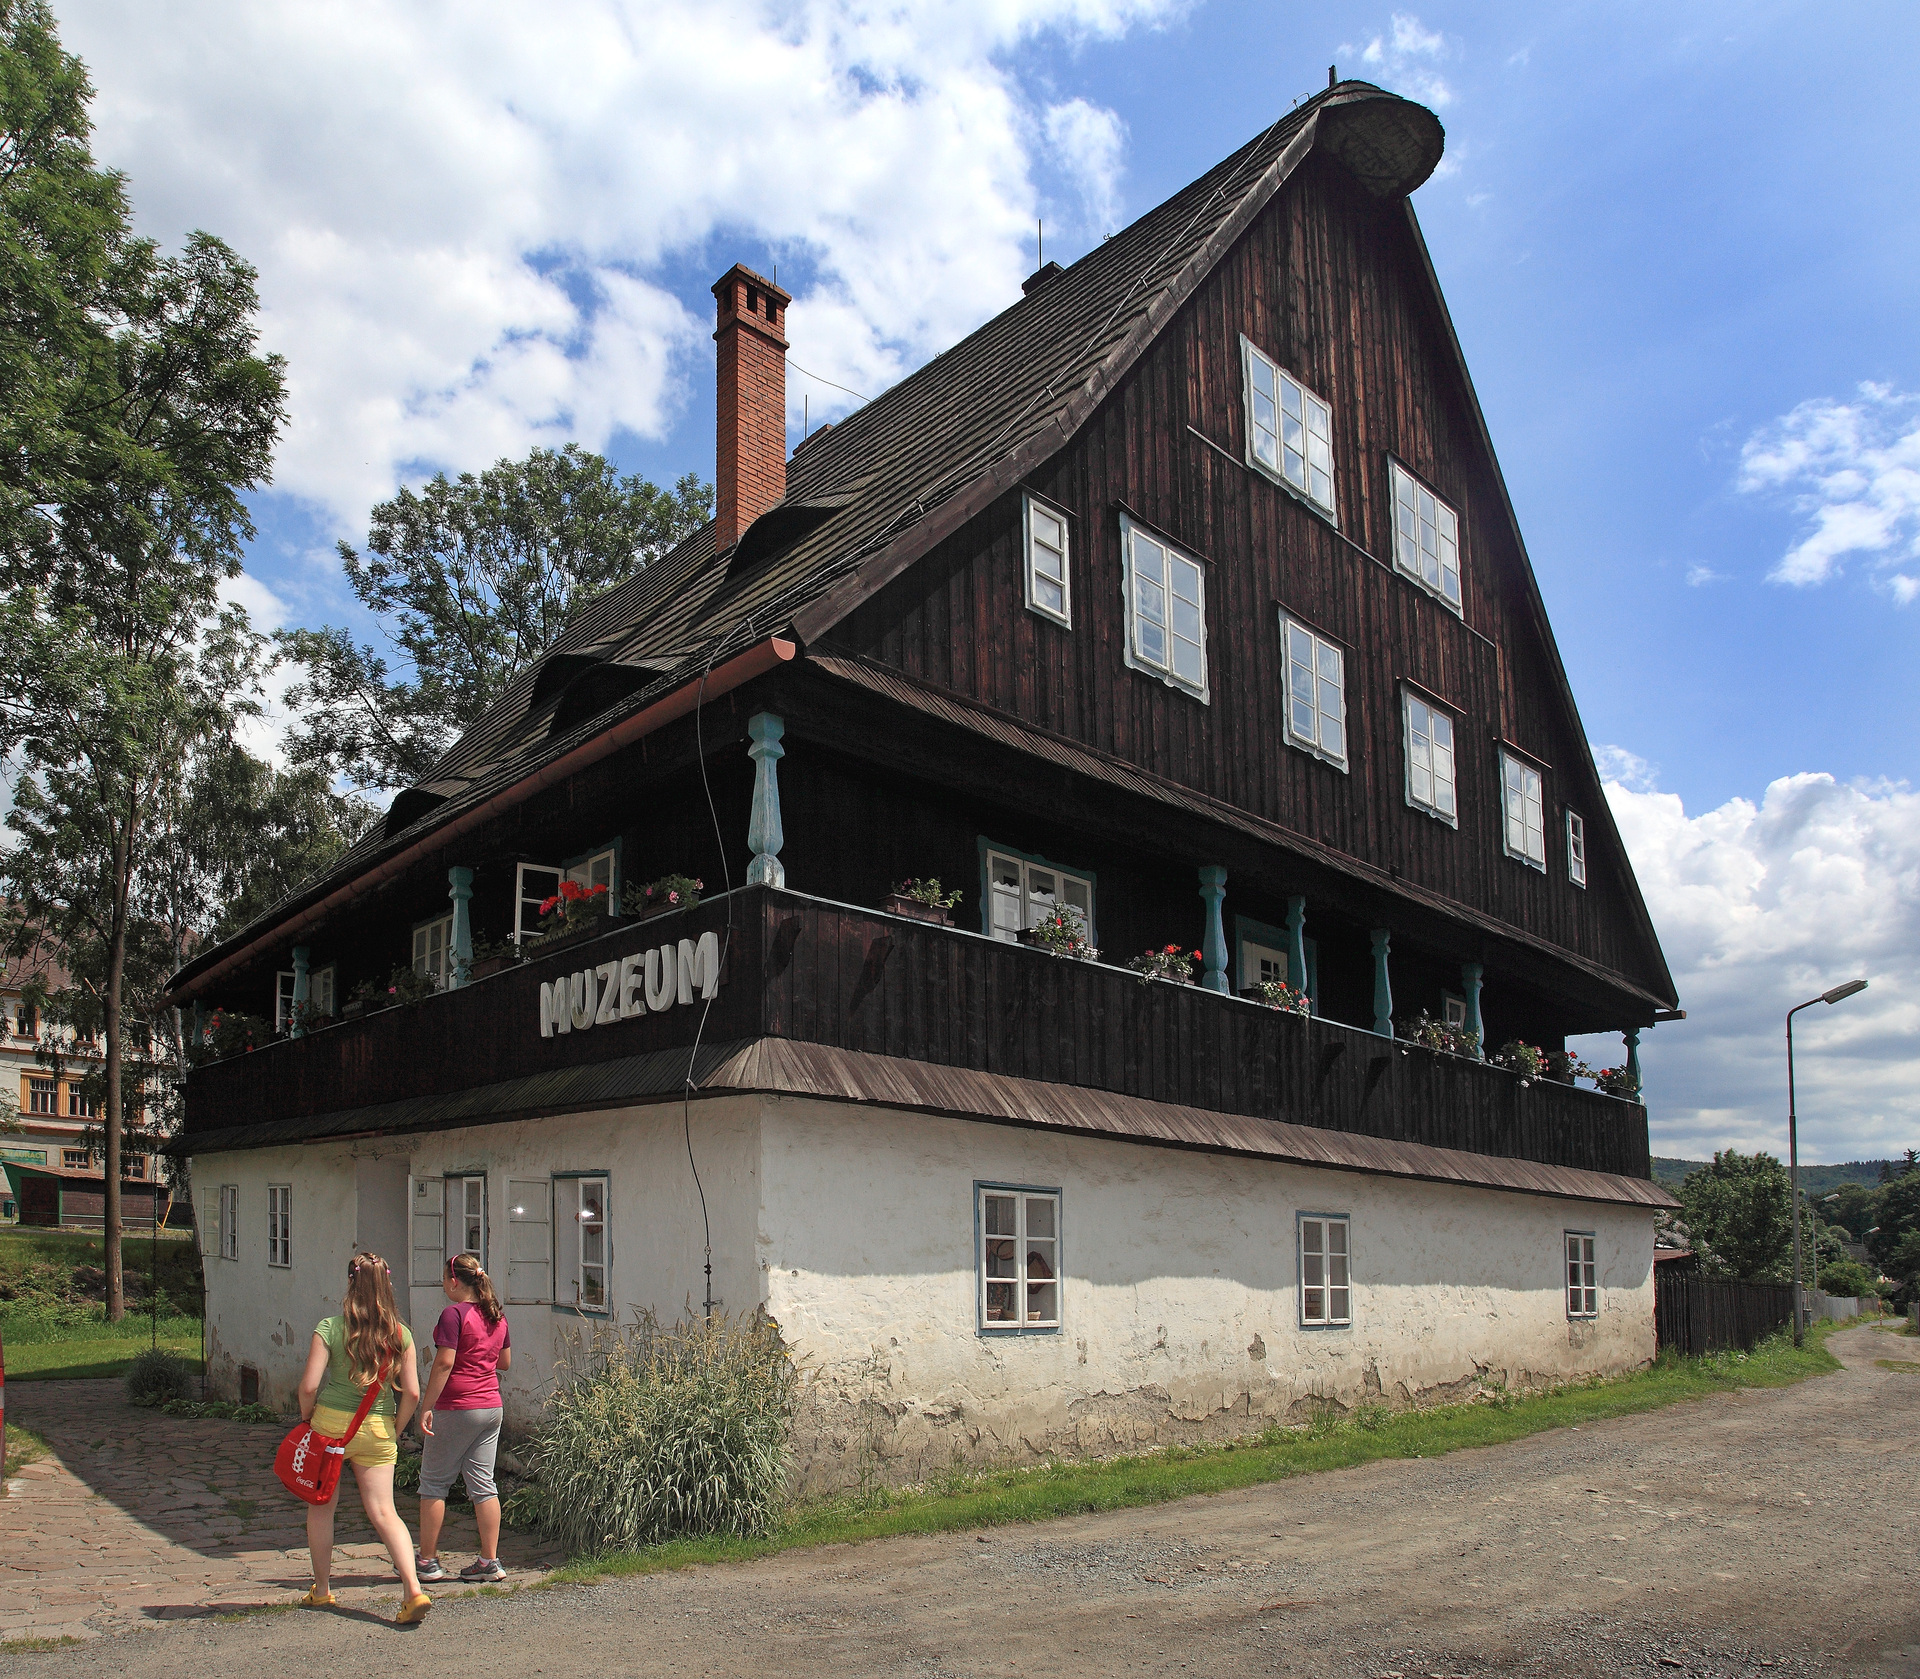 The Historical Scythe Plant in Karlovice